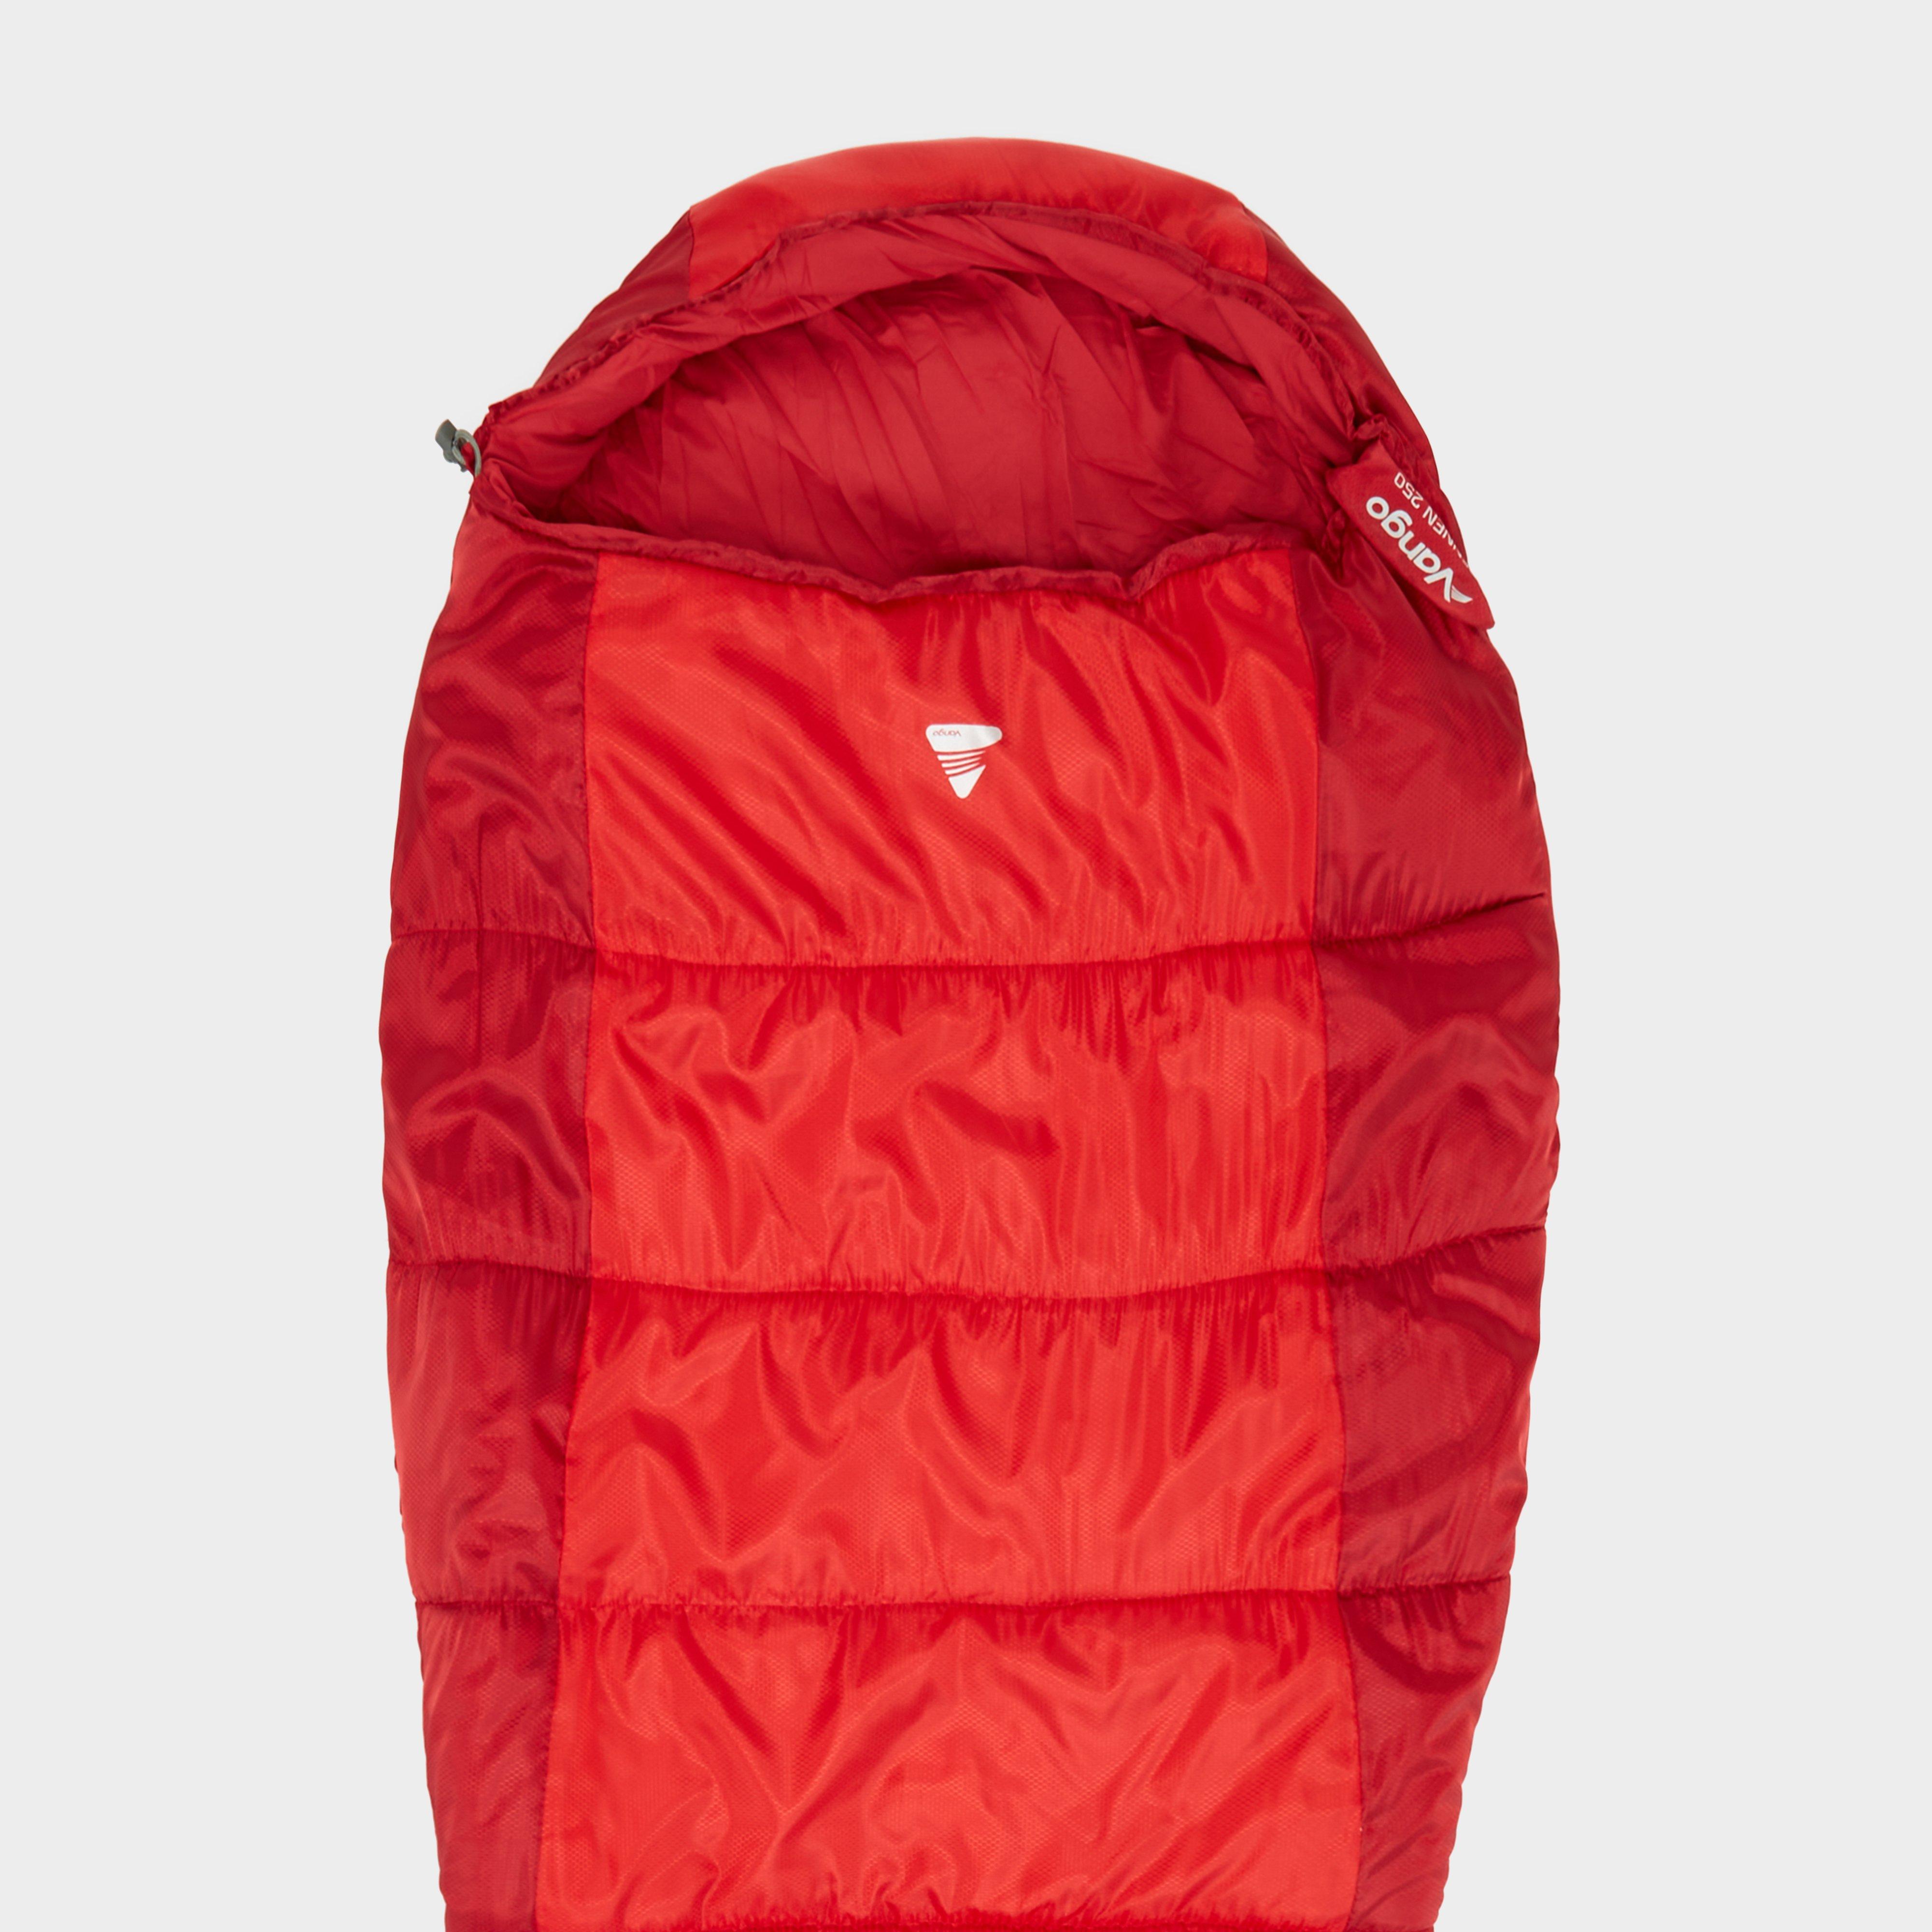 Vango Sennen 250 Sleeping Bag - Red/red  Red/red